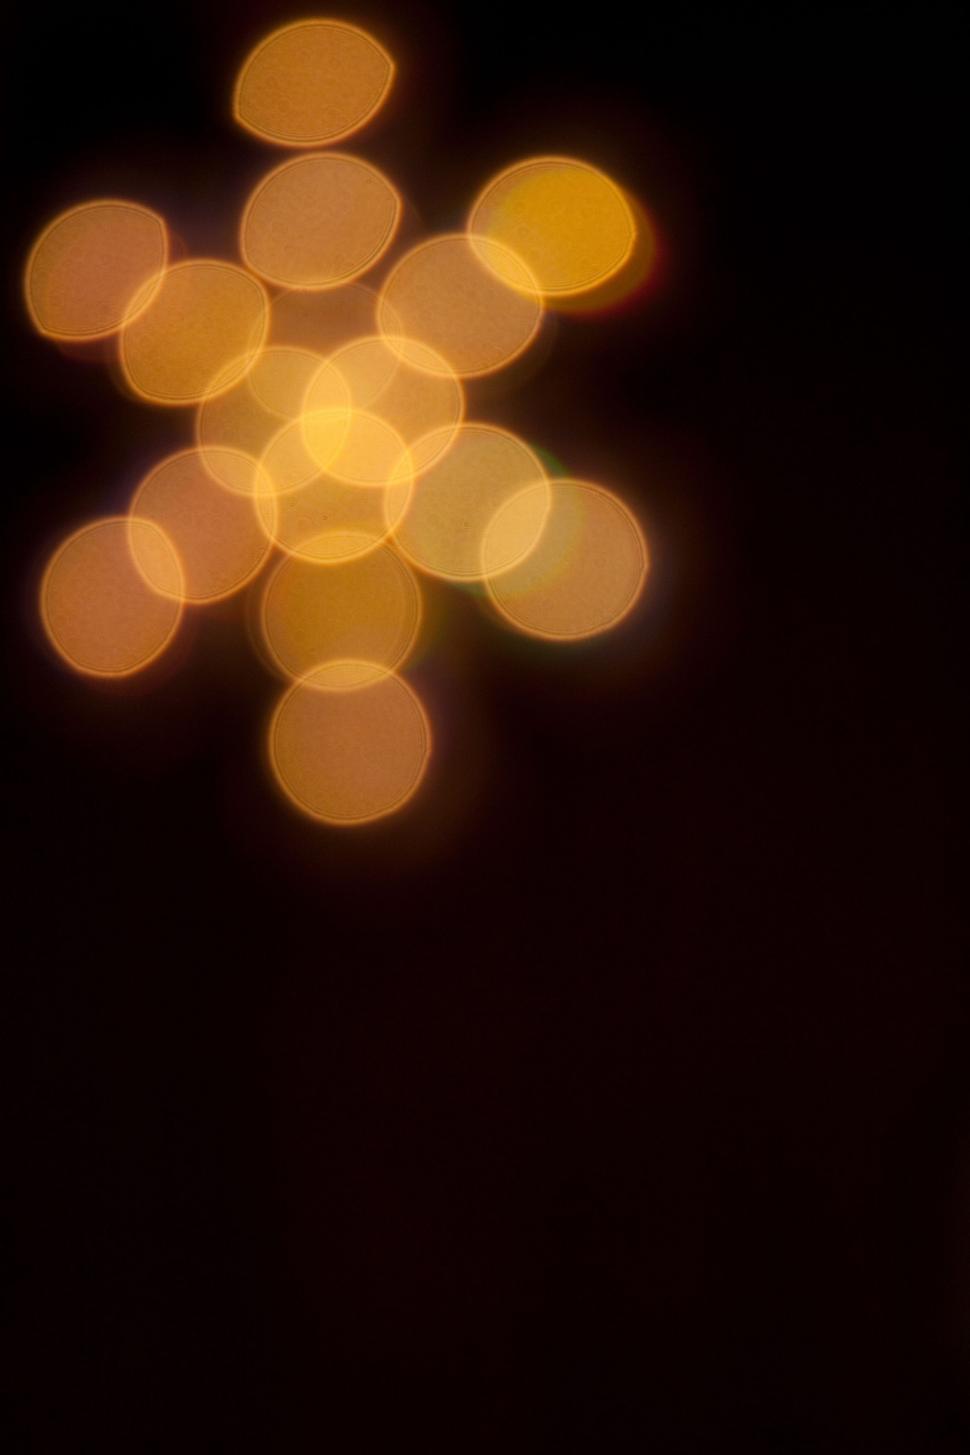 Free Image of Golden Bokeh Lights - Star 